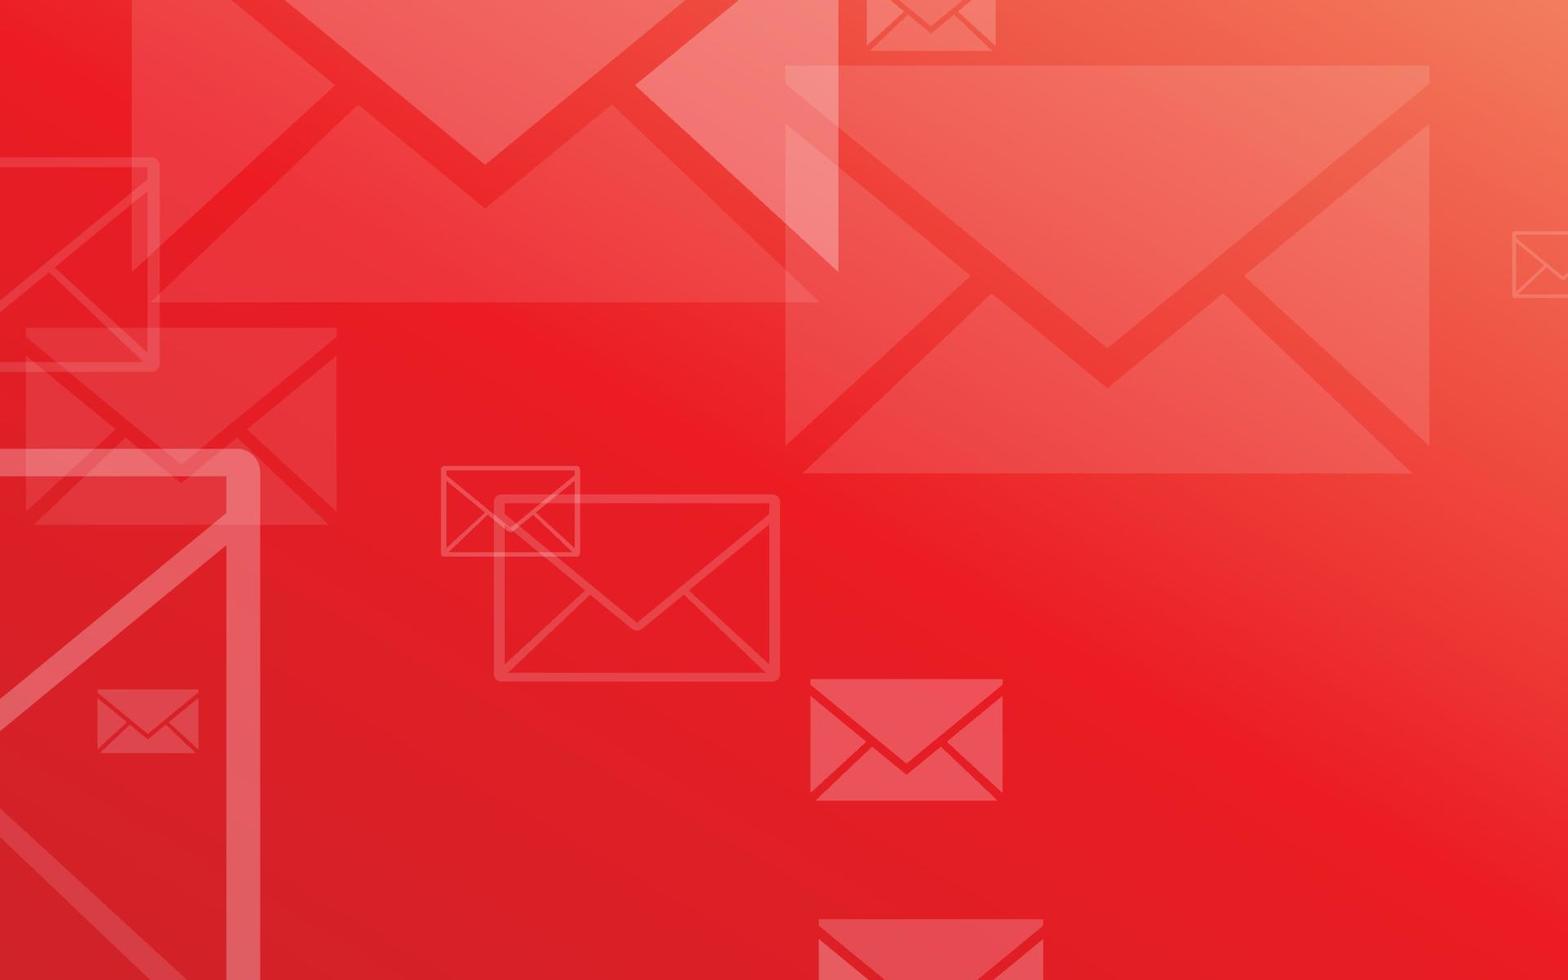 fondo rojo, vector de ilustración abstracta minimalista aleatoria para logotipo, tarjeta, banner, web e impresión.